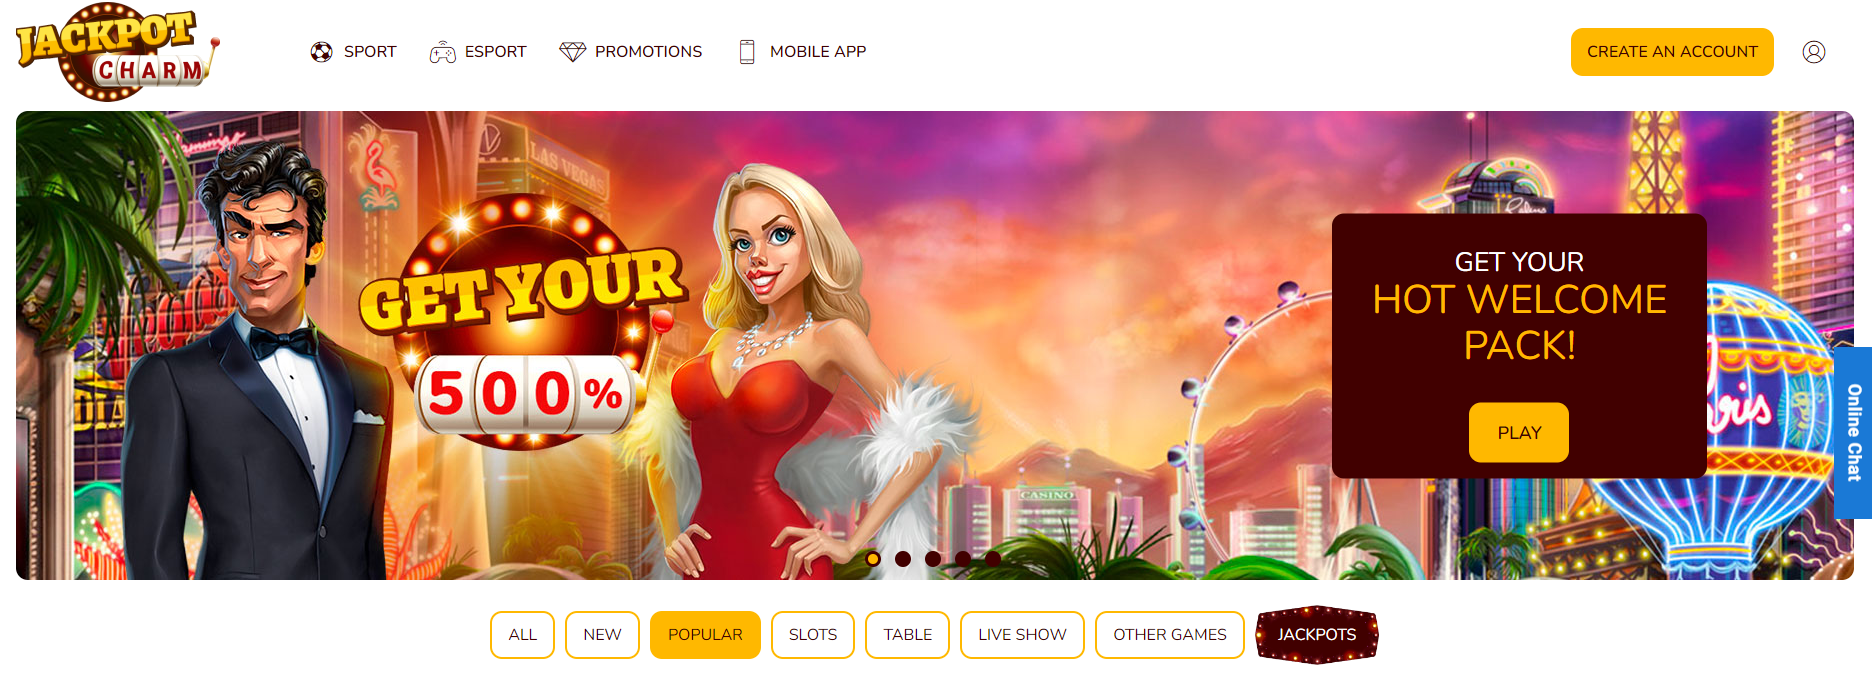 Jackpot Charm Casino Homepage